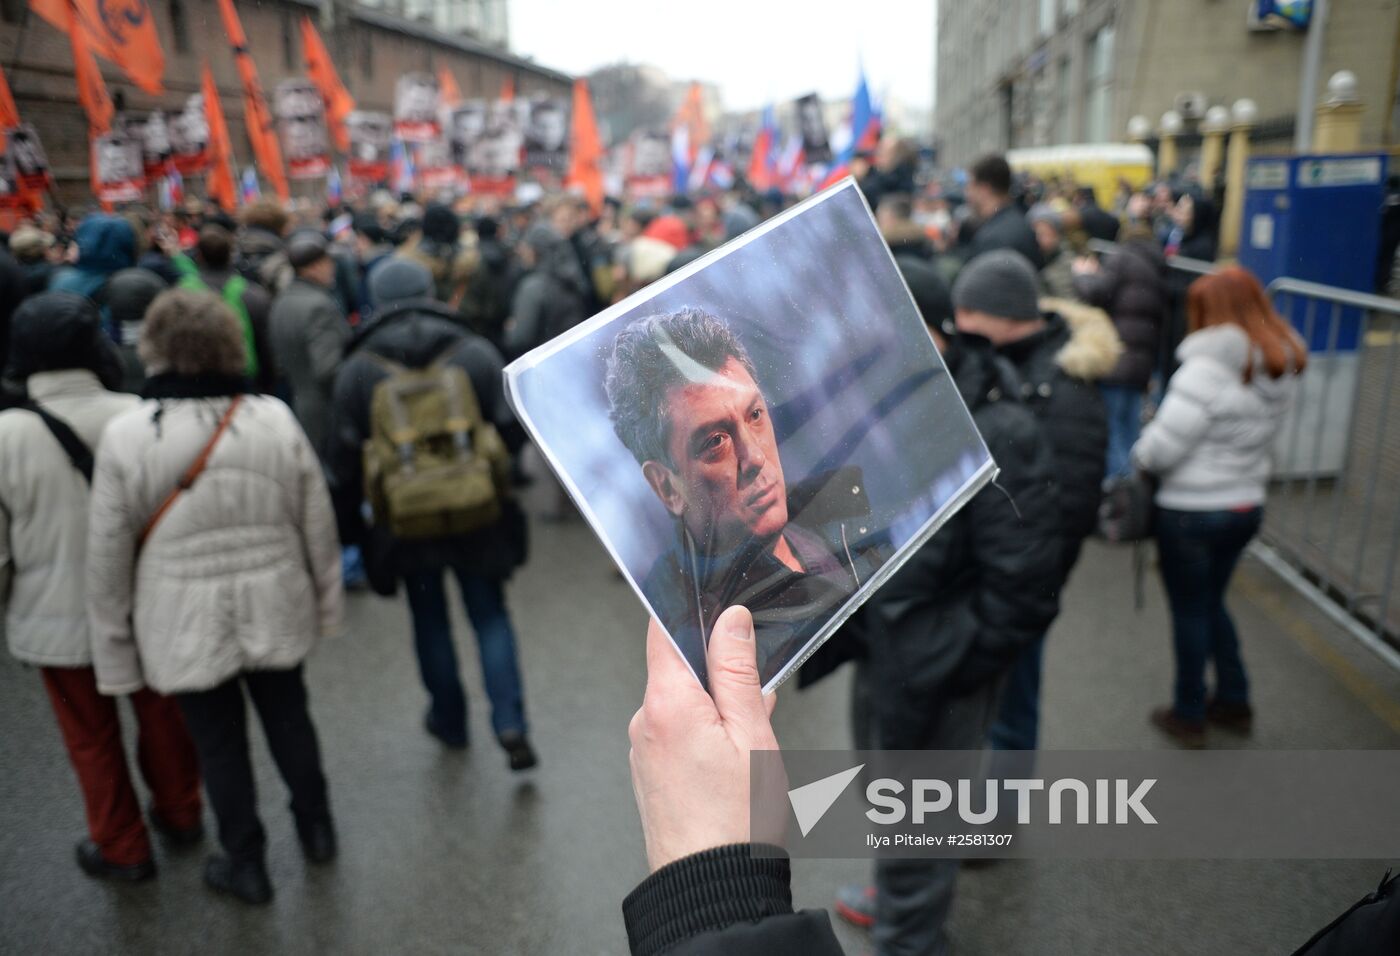 March in honor of politician Boris Nemtsov in Moscow